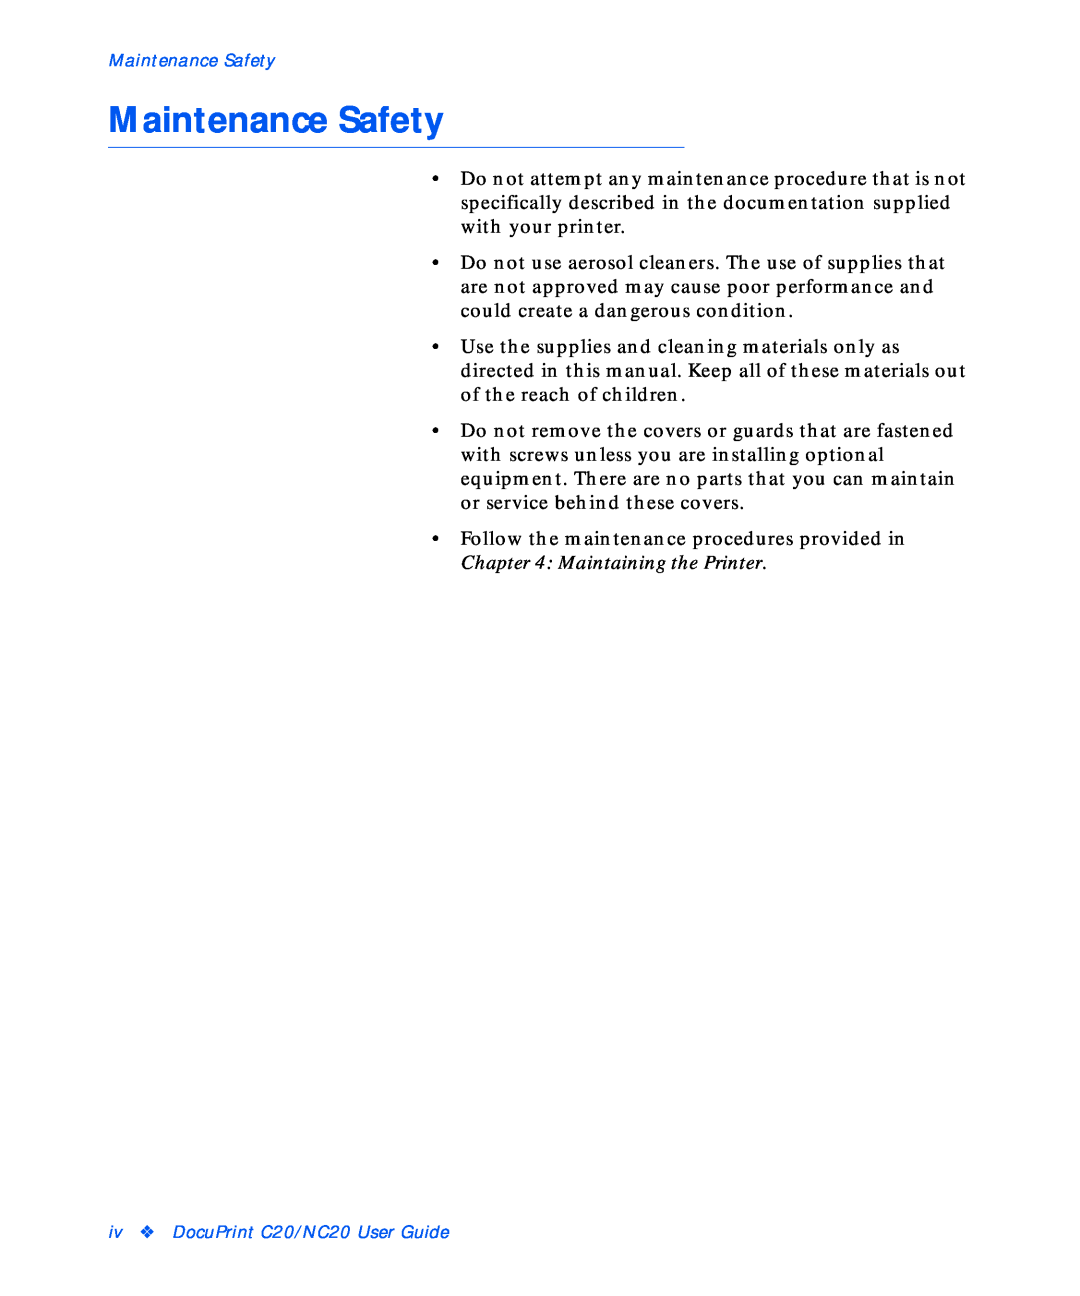 Xerox manual Maintenance Safety, iv DocuPrint C20/NC20 User Guide 